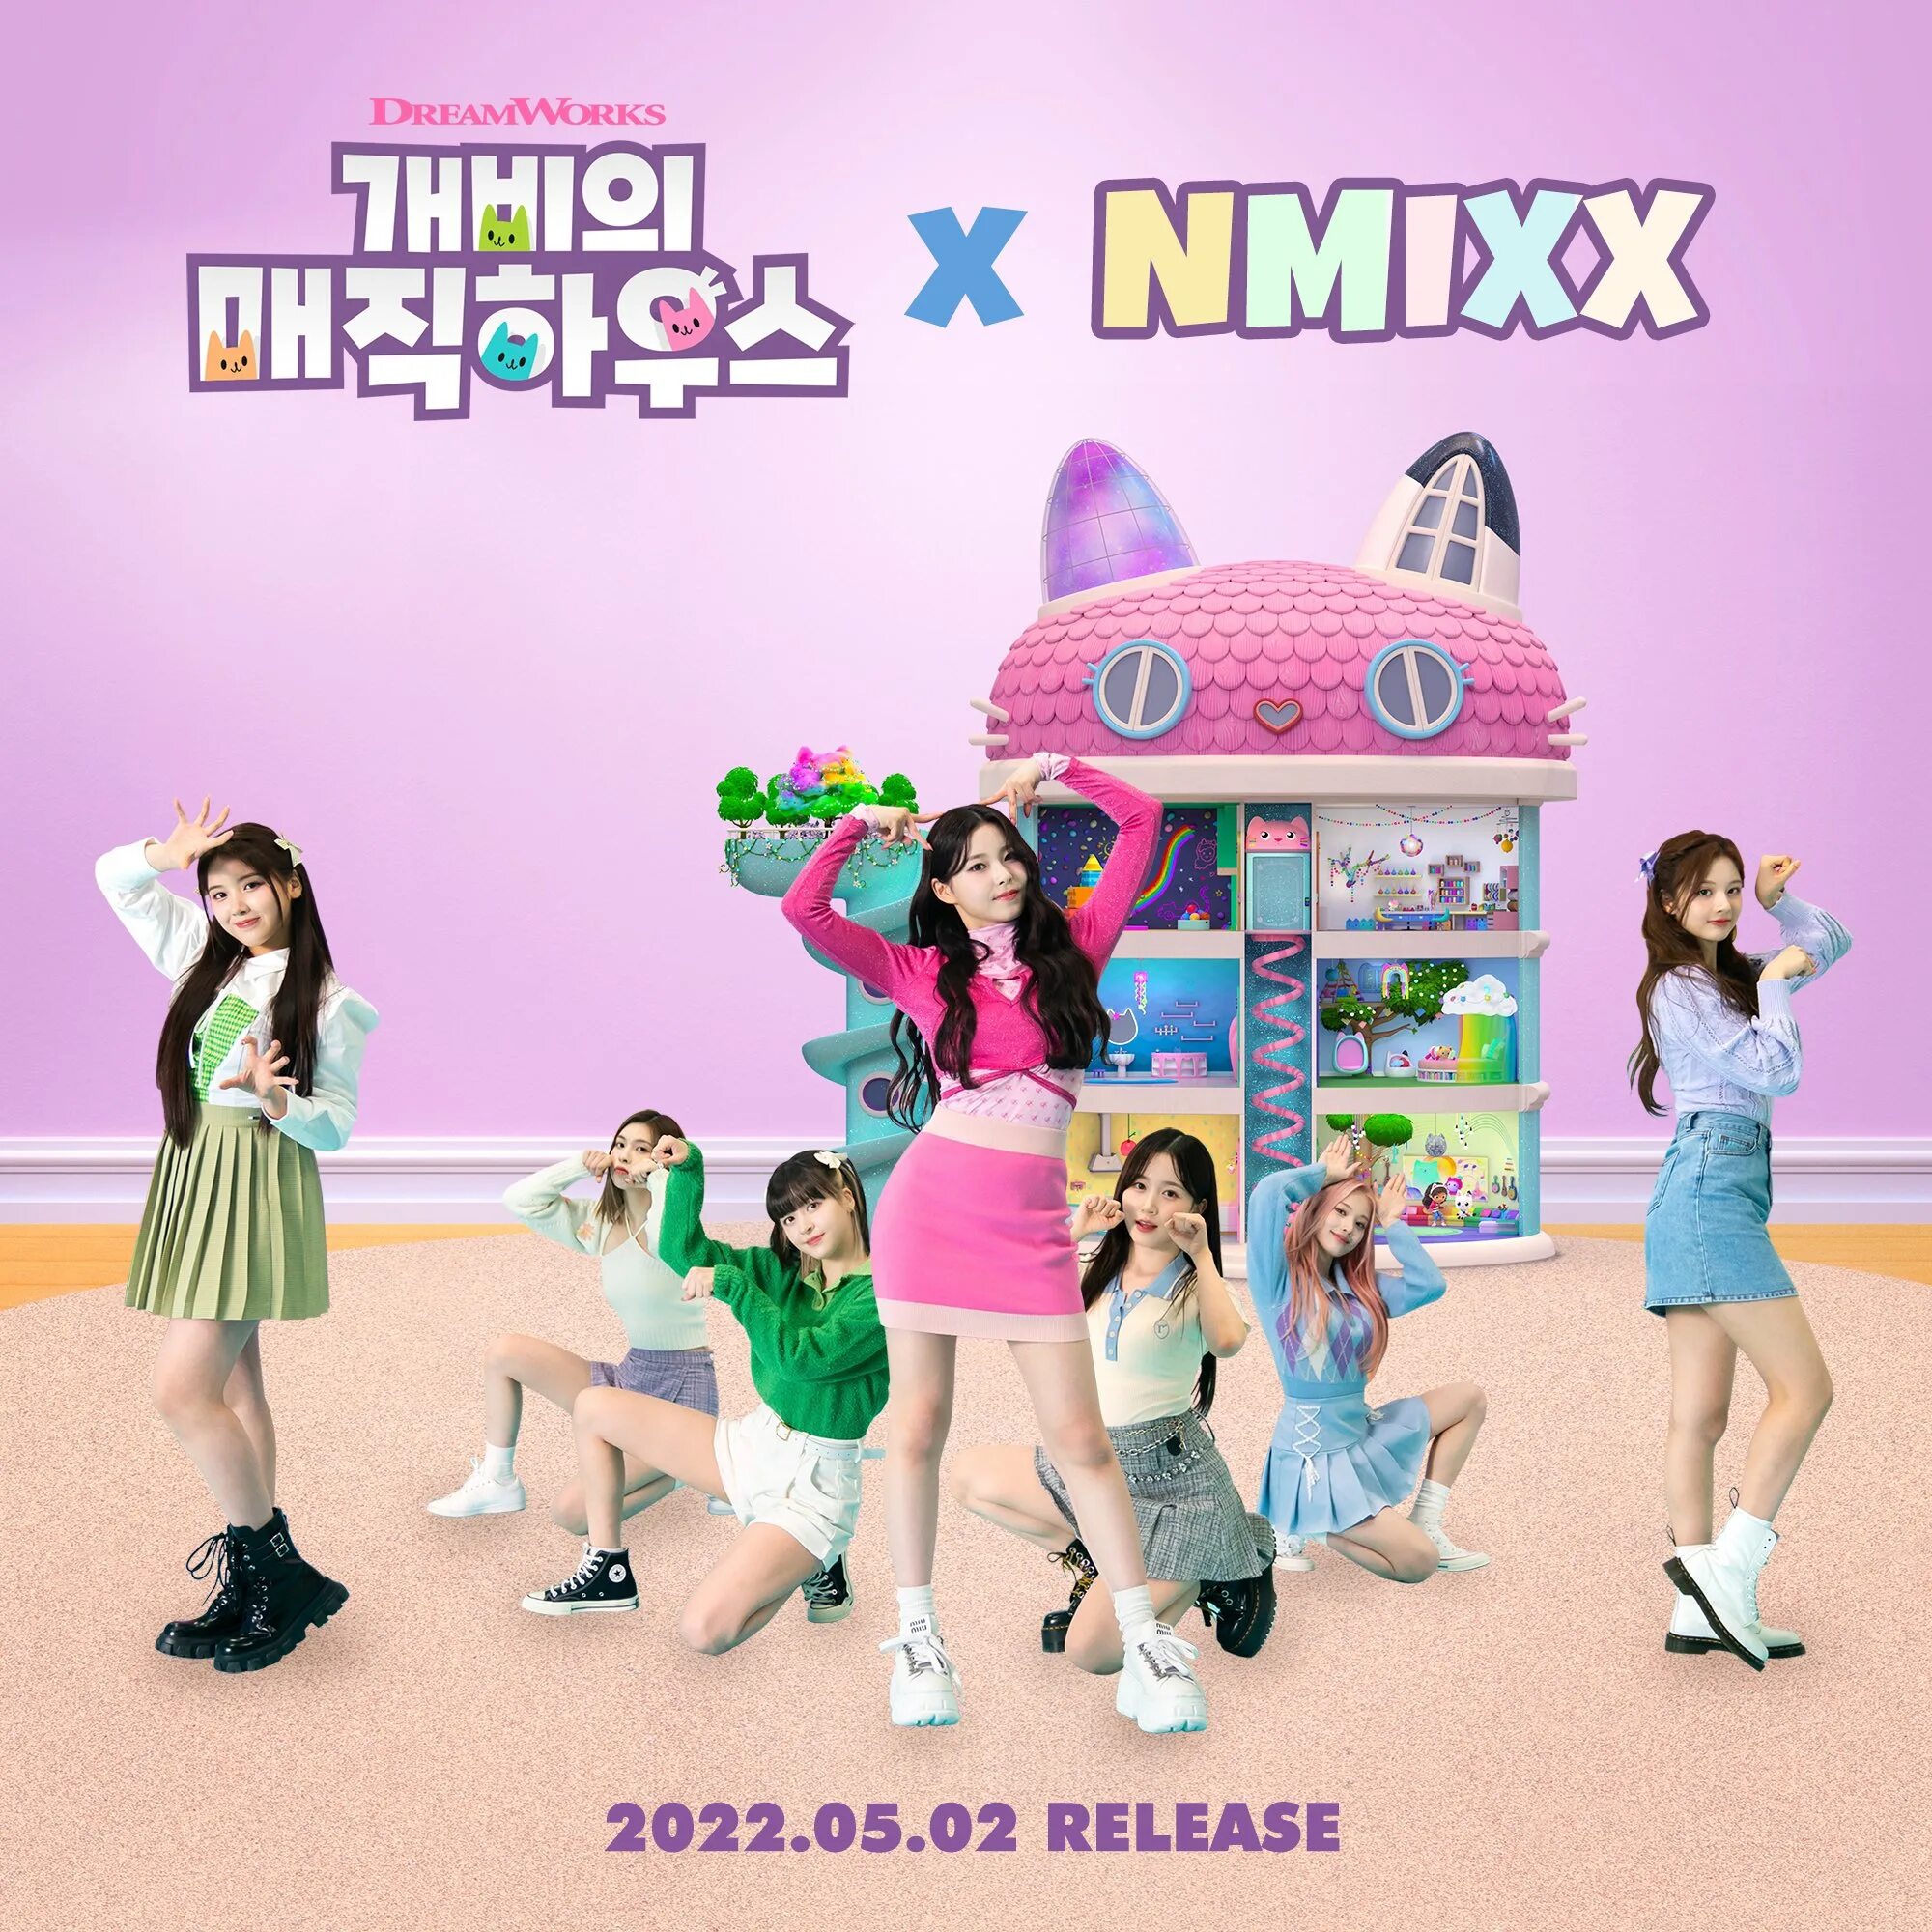 NMIXX макнэ. NMIXX kpop. NMIXX альбом. Группа NMIXX песни.